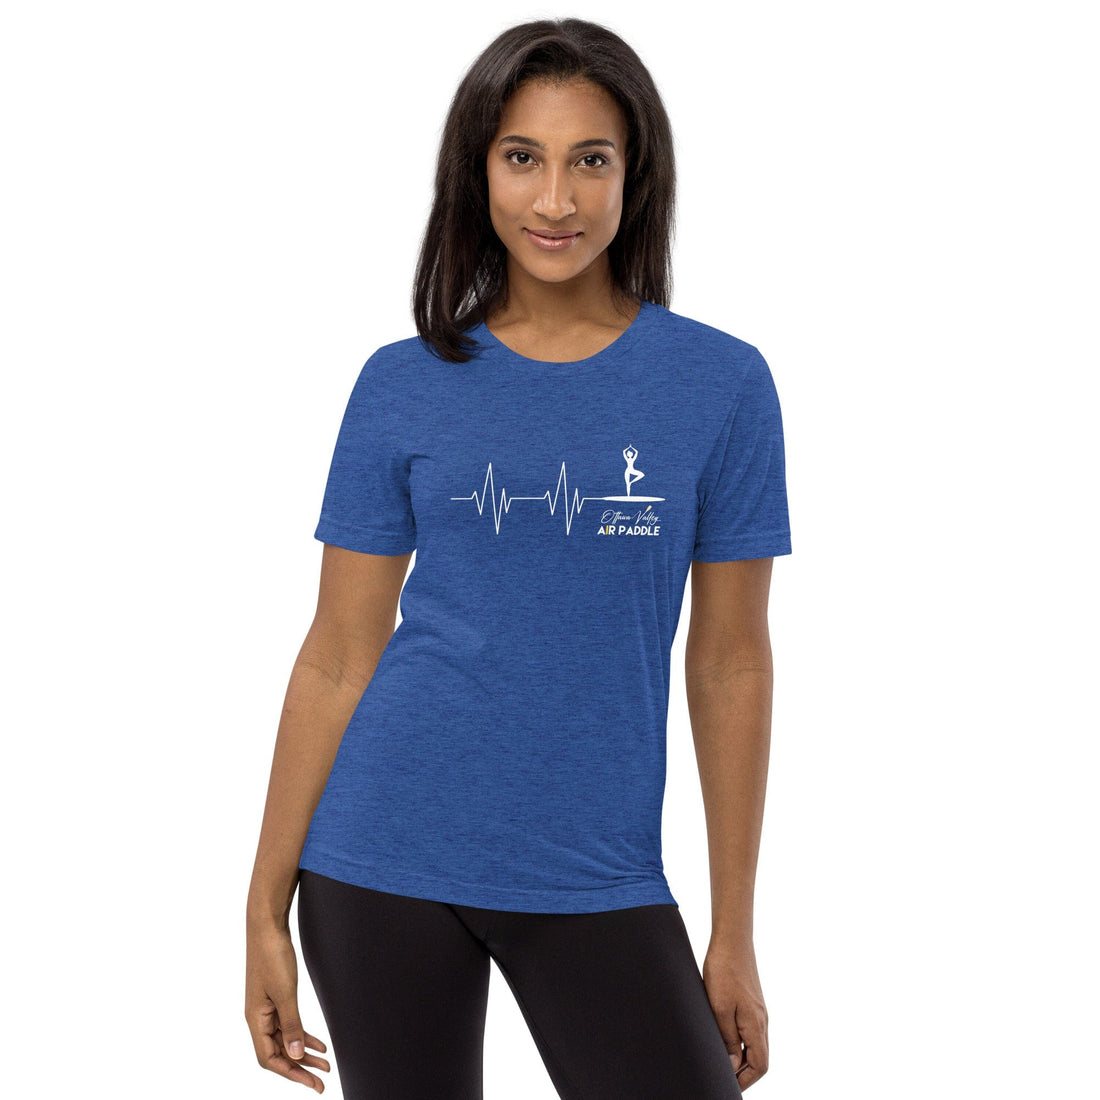 Ottawa Valley Air Paddle True Royal Triblend / XS Heartbeat Yoga Women's T-Shirt